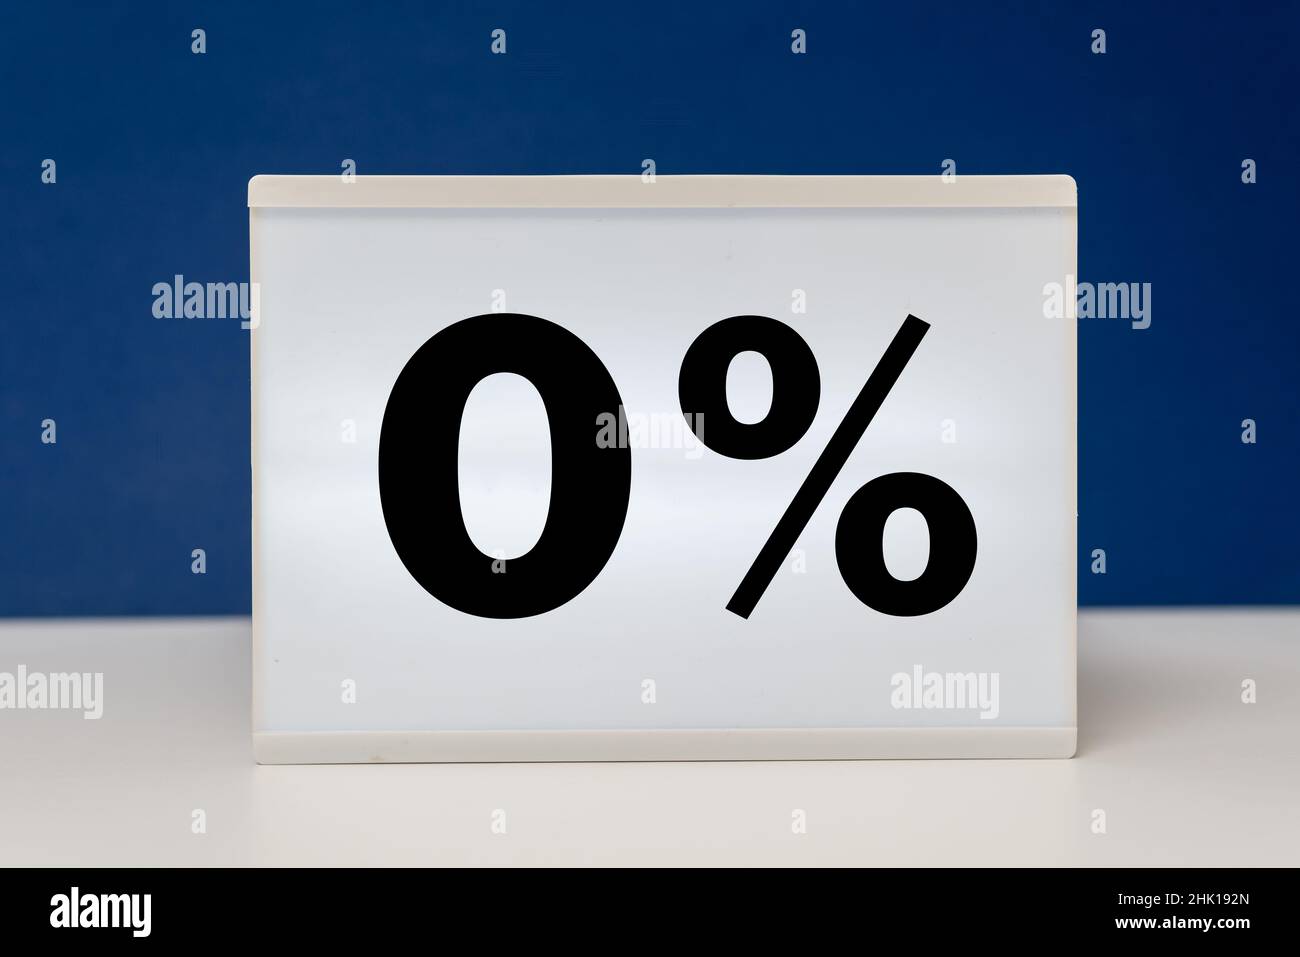 Zero percent on white box with blue background Stock Photo